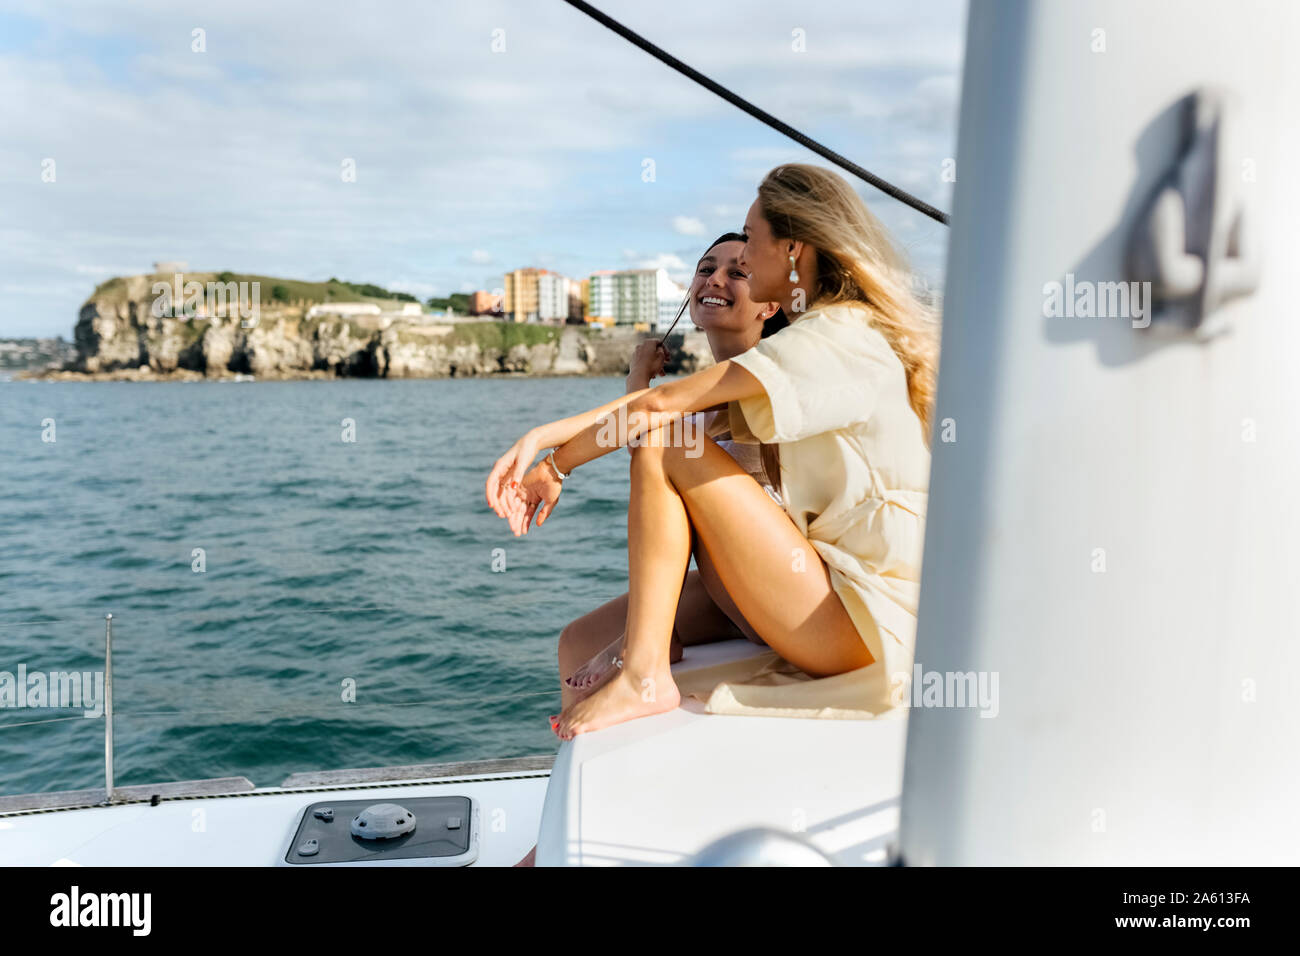 Two beautiful women enjoying a summer day on a sailboat Stock Photo